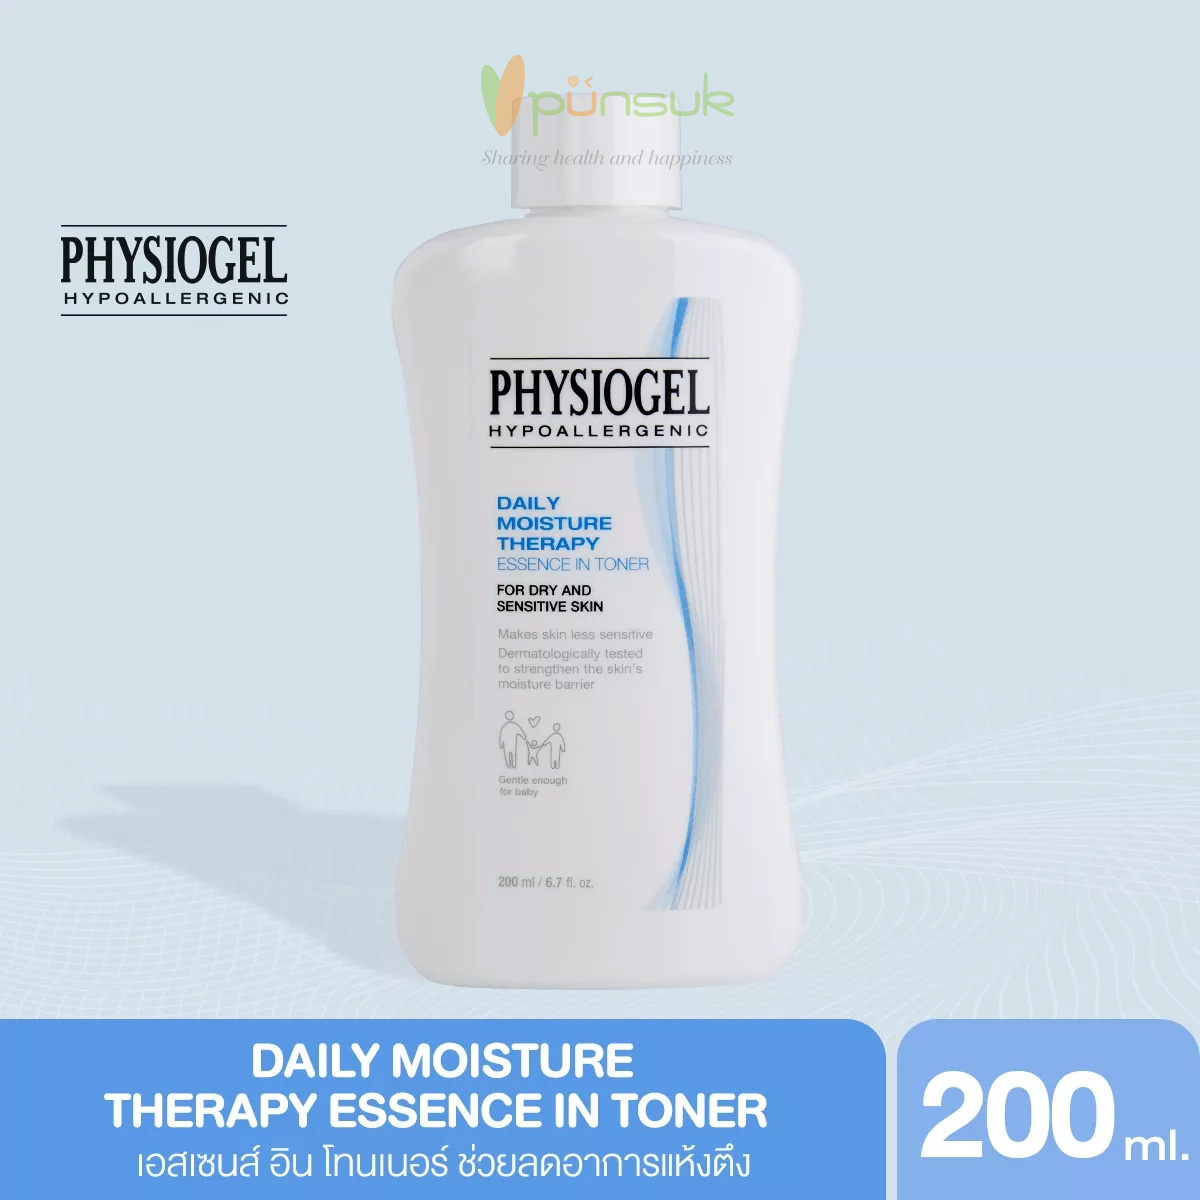 PHYSIOGEL Daily Moisture Therapy Essence in Toner ฟิสิโอเจล เดลี่ มอยซ์เจอร์ เทอราพี โทนเนอร์ 200 ml.